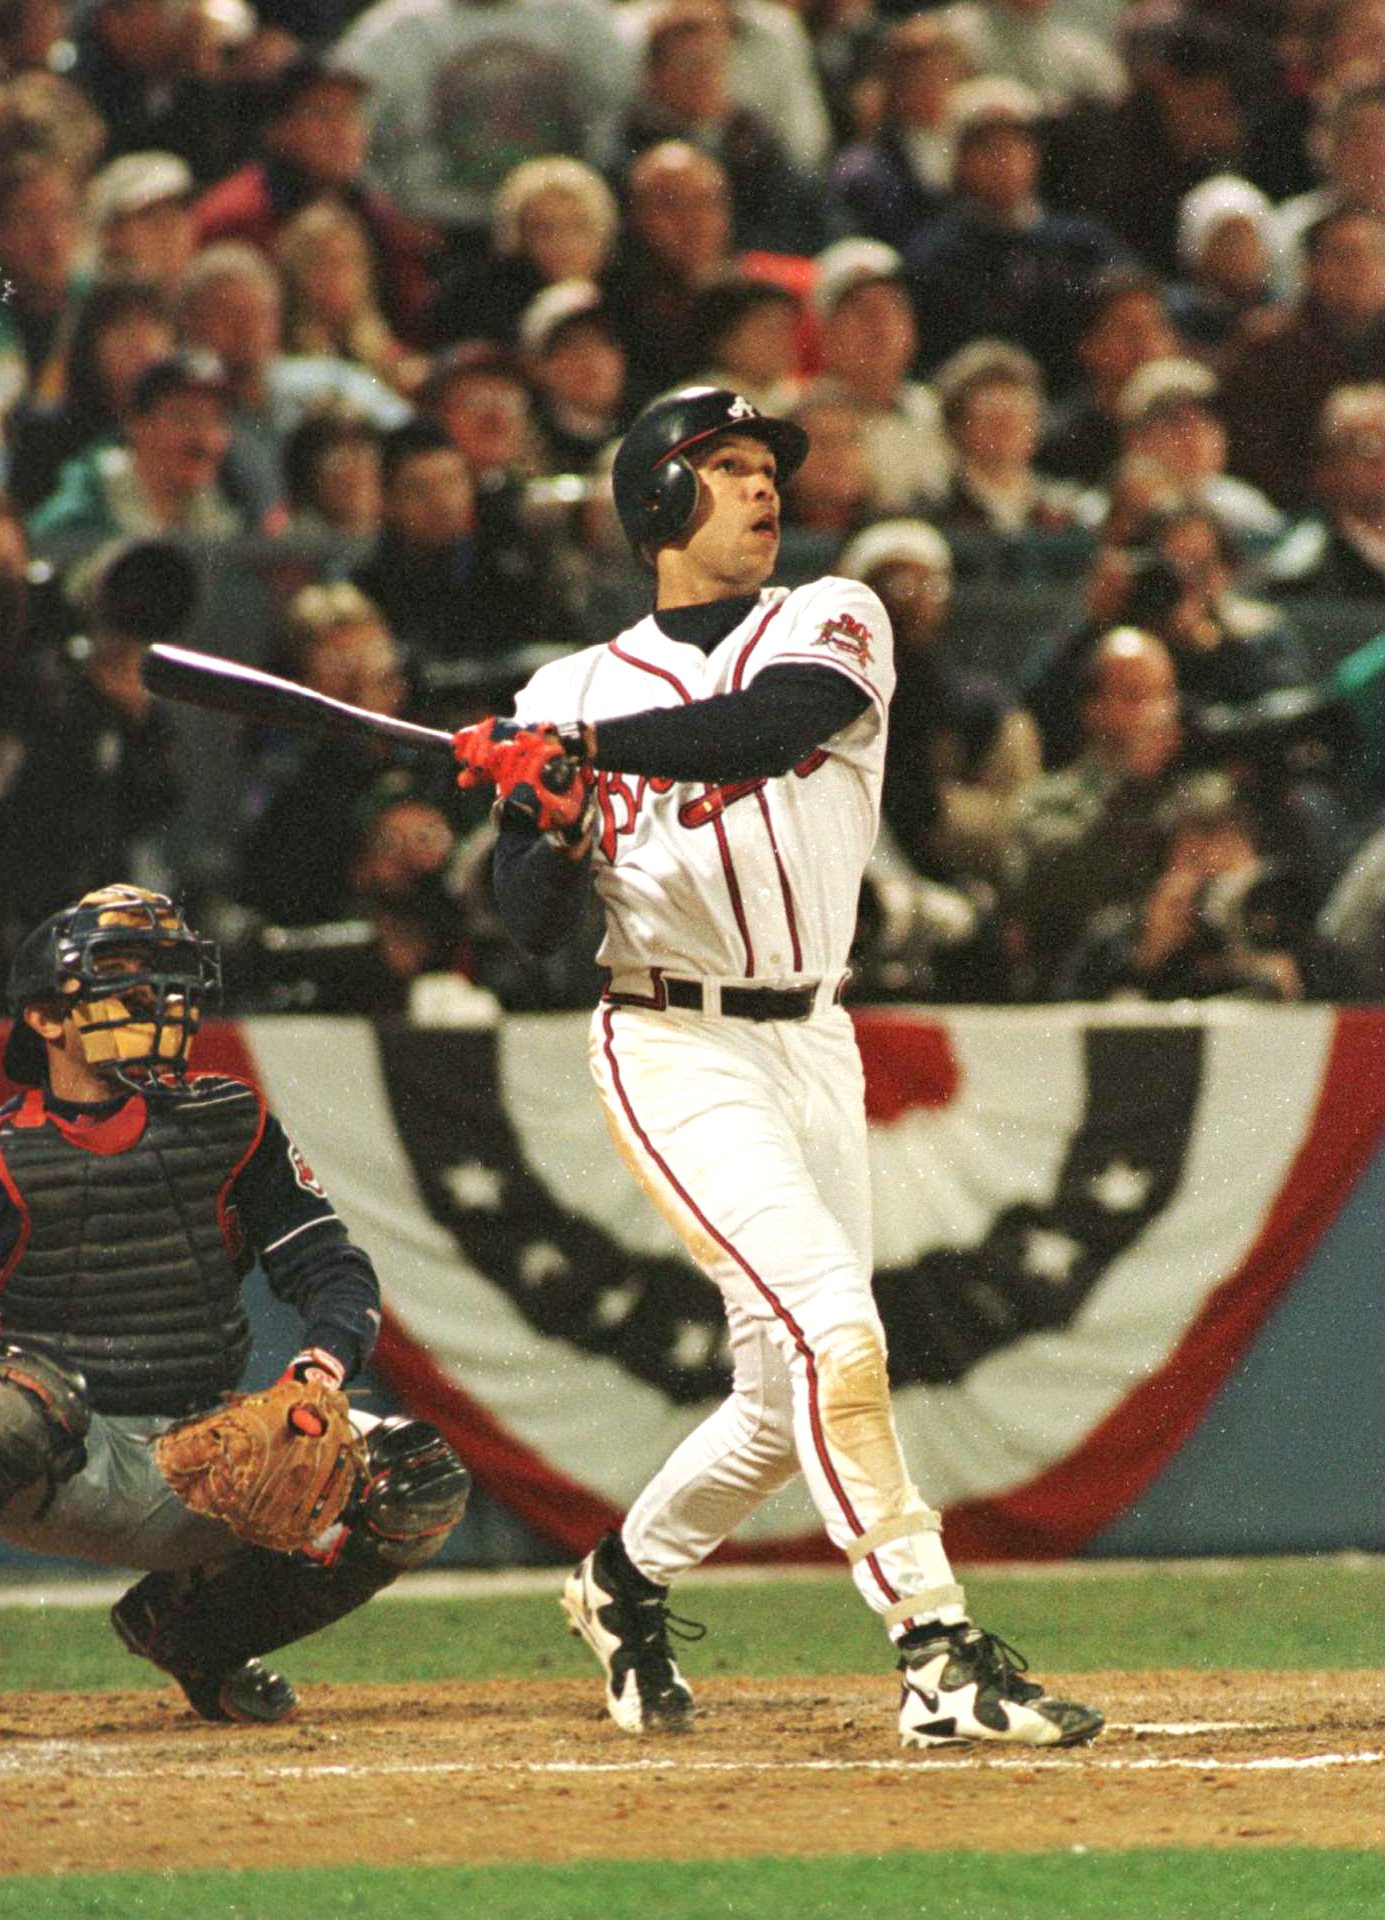 Photos: Remembering the Atlanta Braves' 1995 World Series win